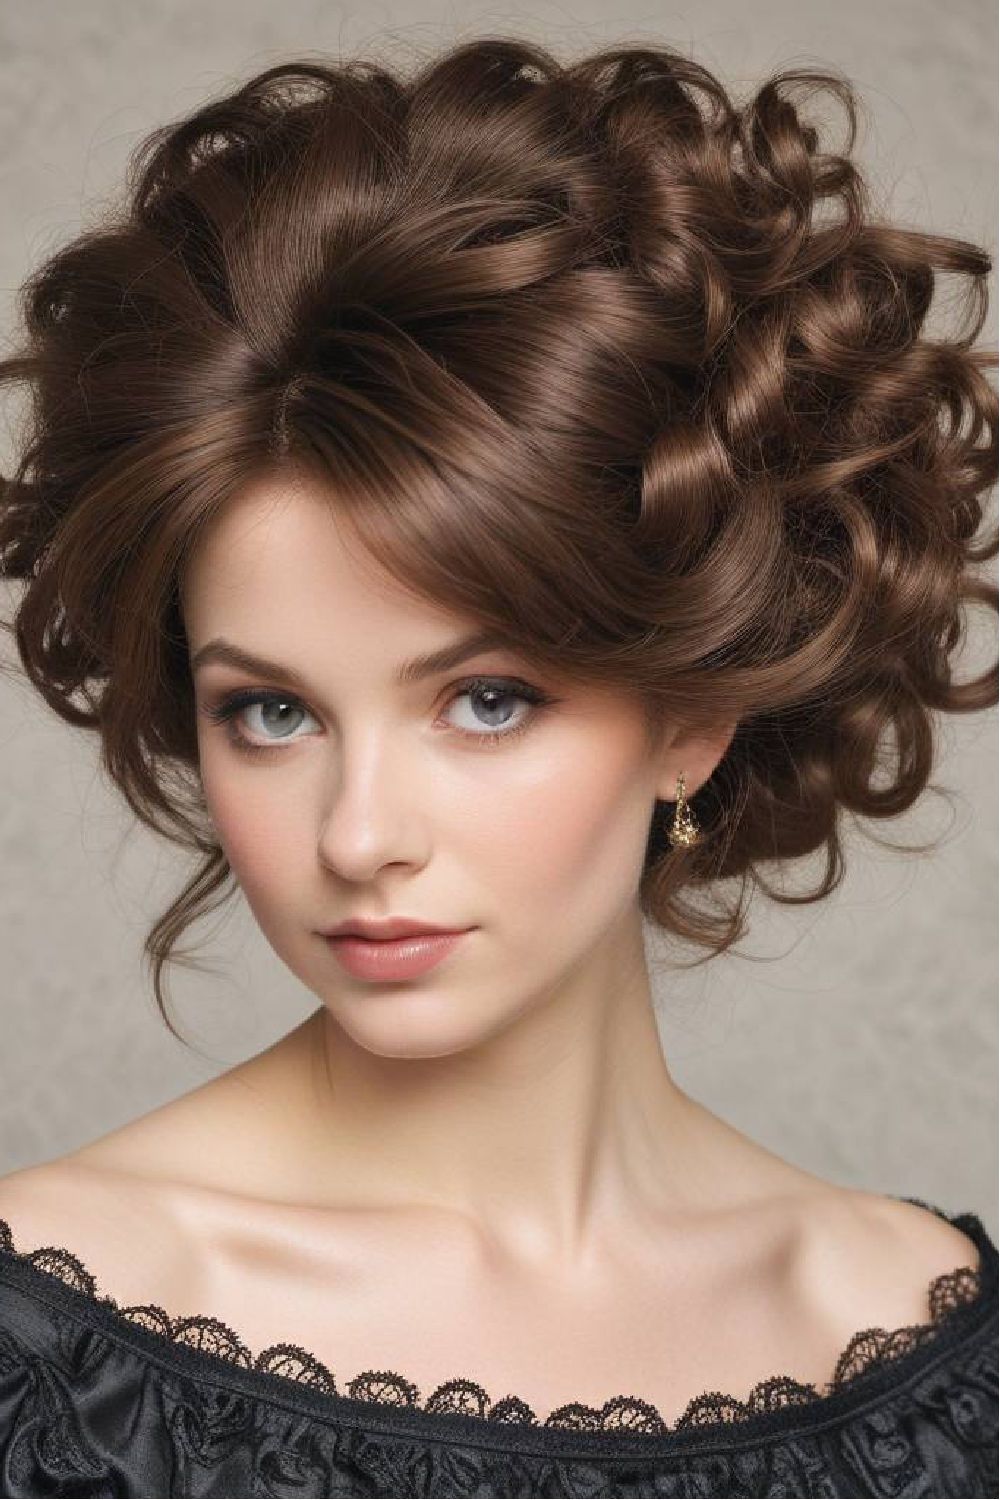 stunning victorian bouffant hairstyle